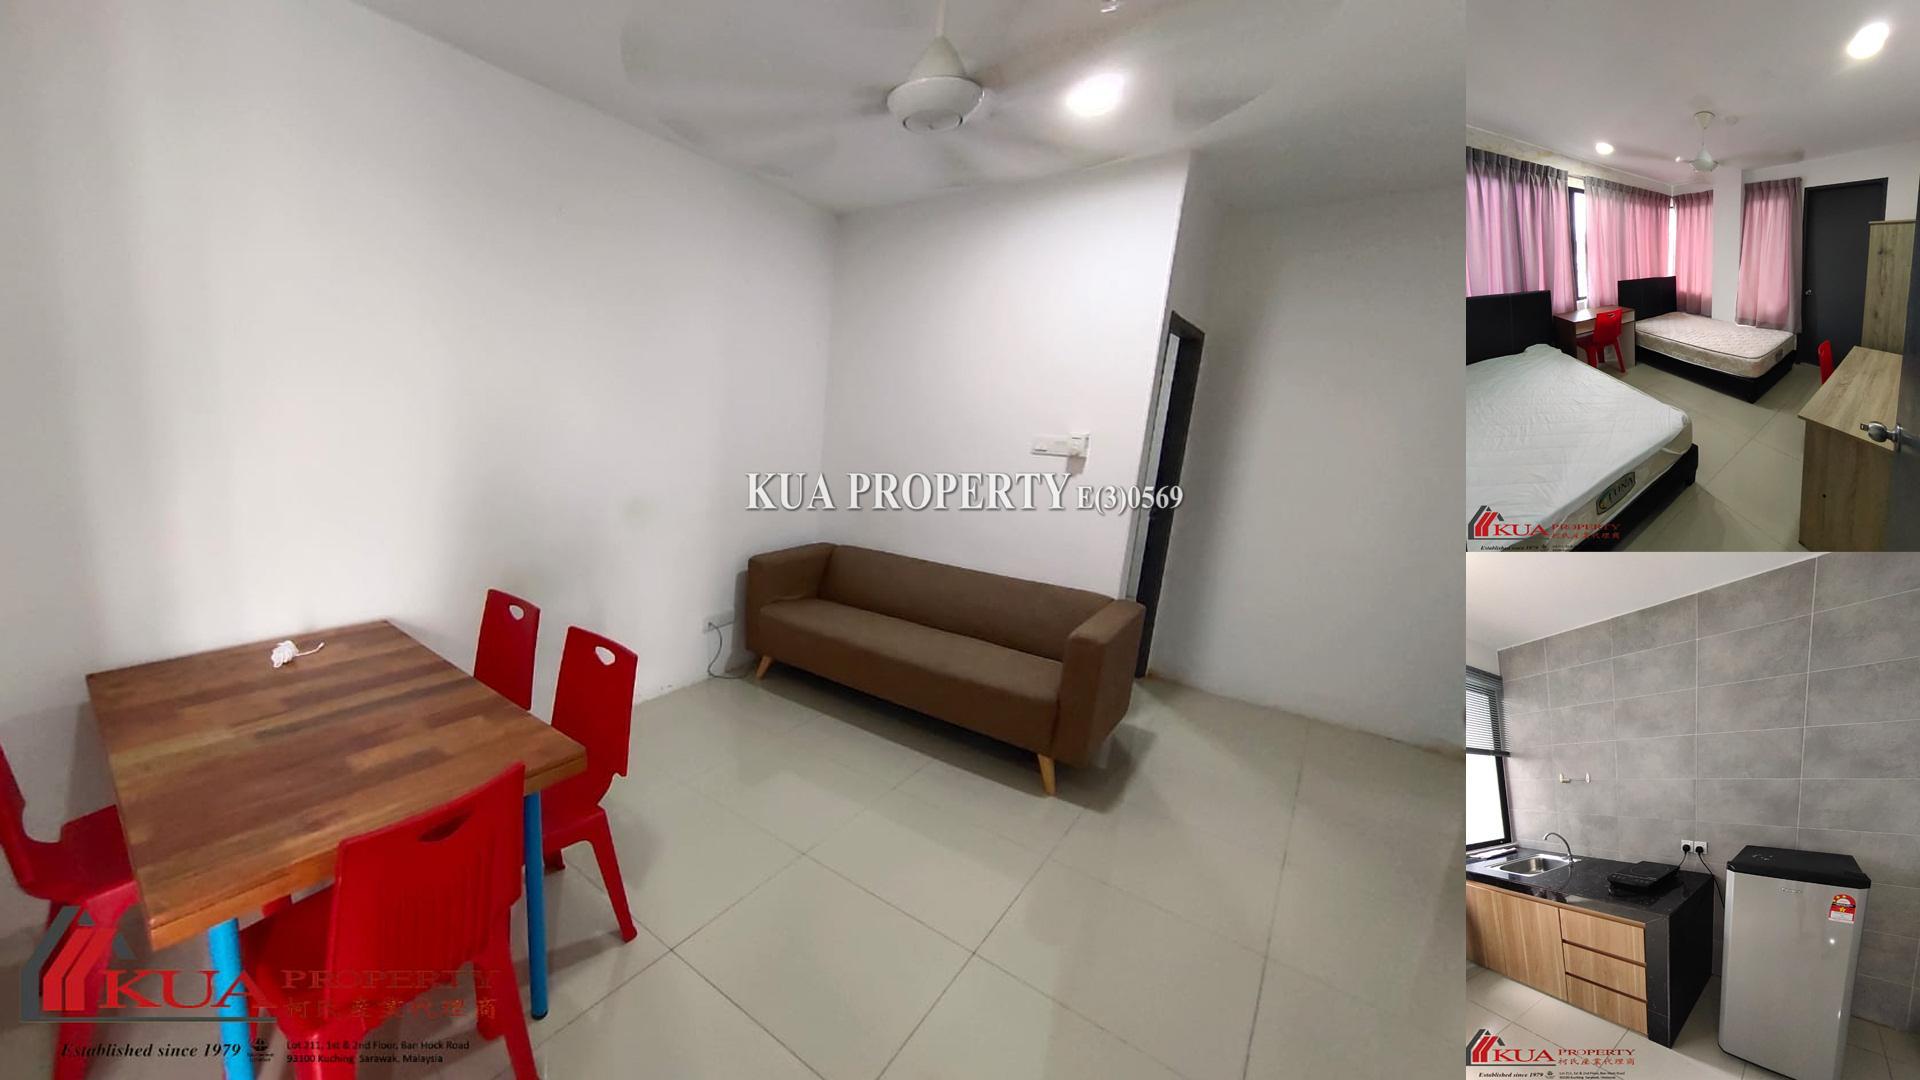 Queen’s Residence Apartment For Rent! at Jalan Tabuan Dayak, Kuching